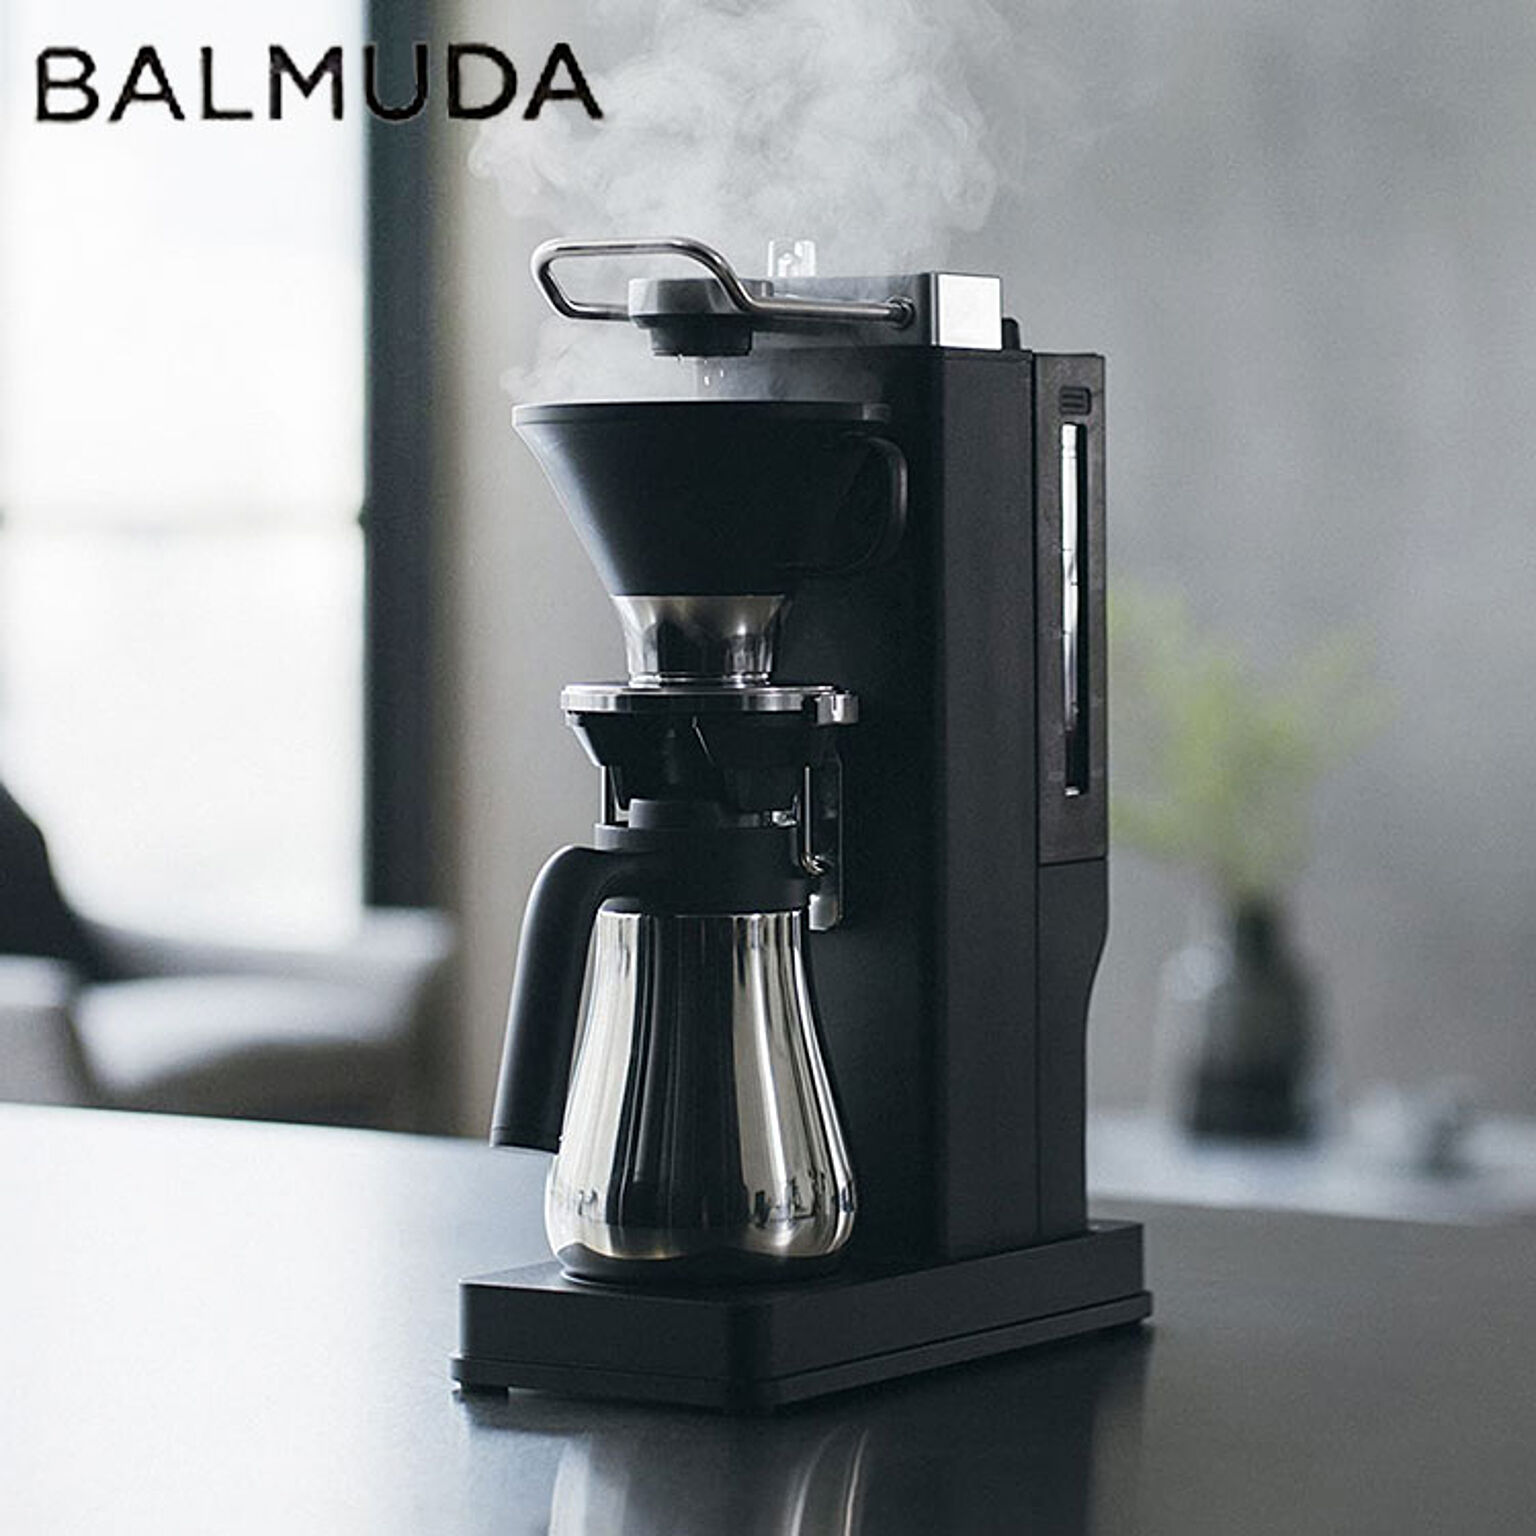 BALMUDA バルミューダ コーヒーメーカー ドリッパー ドリップコーヒー 保温 ステンレス コーヒーポット ブラック K06A-BK